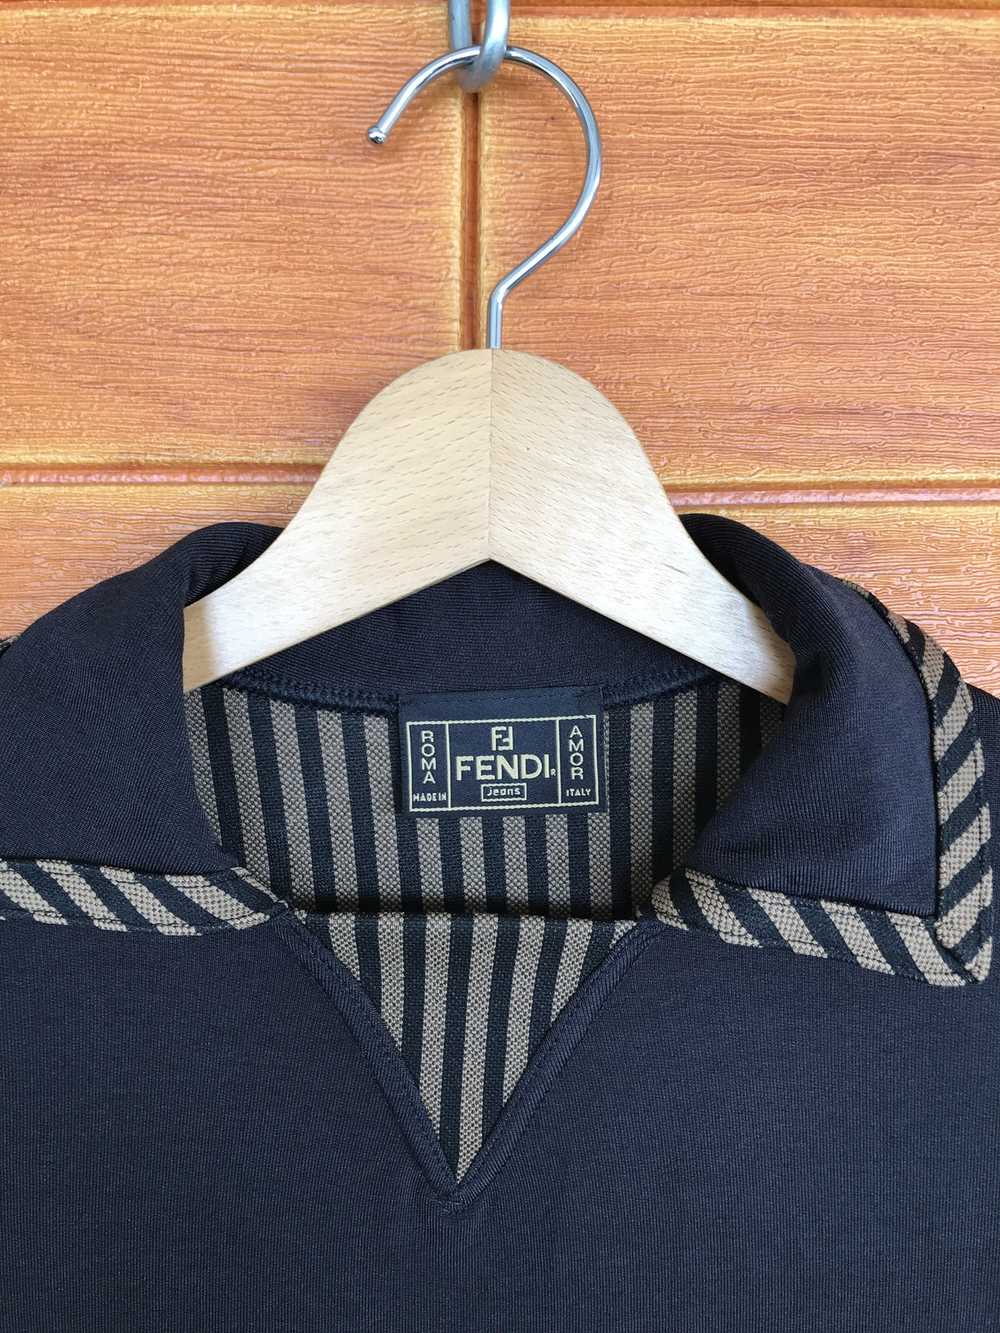 Fendi Fendi Made In Italy Longsleeve T-Shirt - image 3